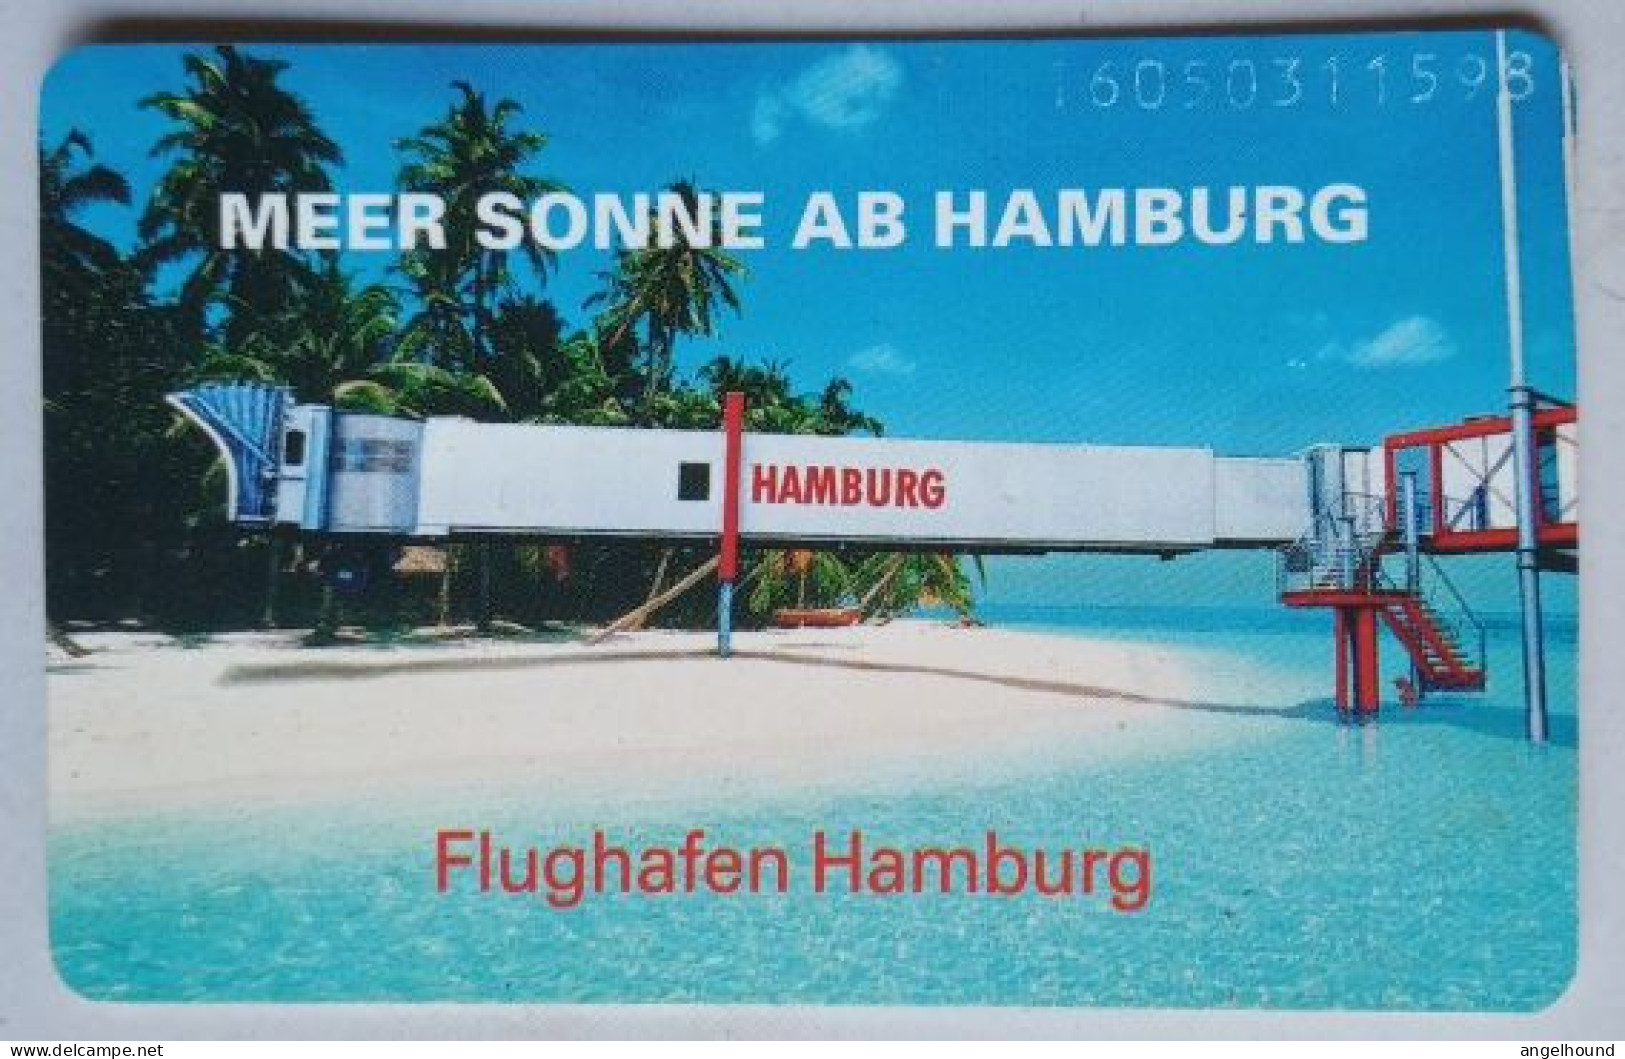 Germany 6 DM  MINT K 011 07.96 2500 Mintage - Flughafen Hamburg / Meer Sonneab Hamburg - K-Reeksen : Reeks Klanten